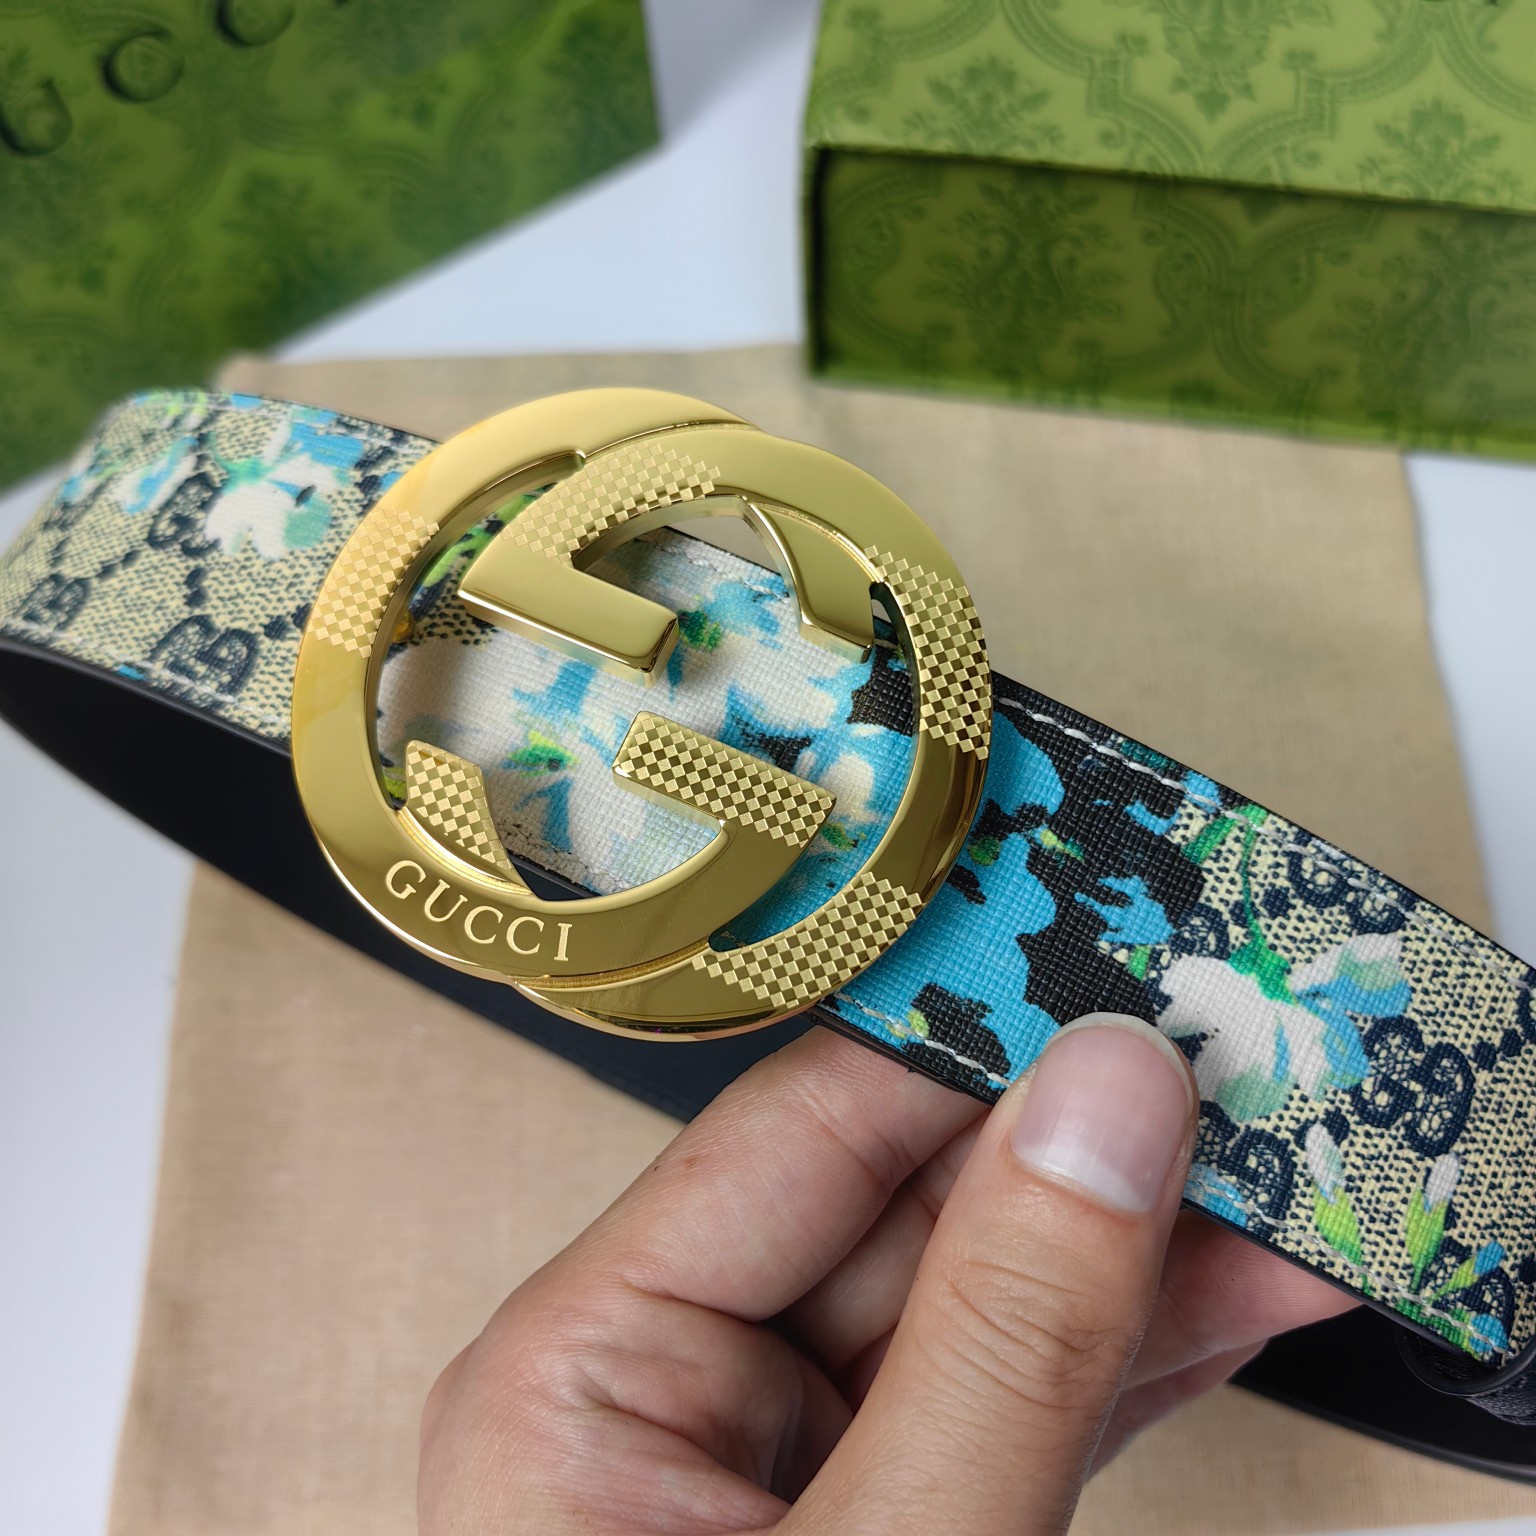 Gucci[愉快][愉快]古驰于1921年创立于佛罗伦萨是全球卓越的奢华精品品牌之一此款式4.0cm是如